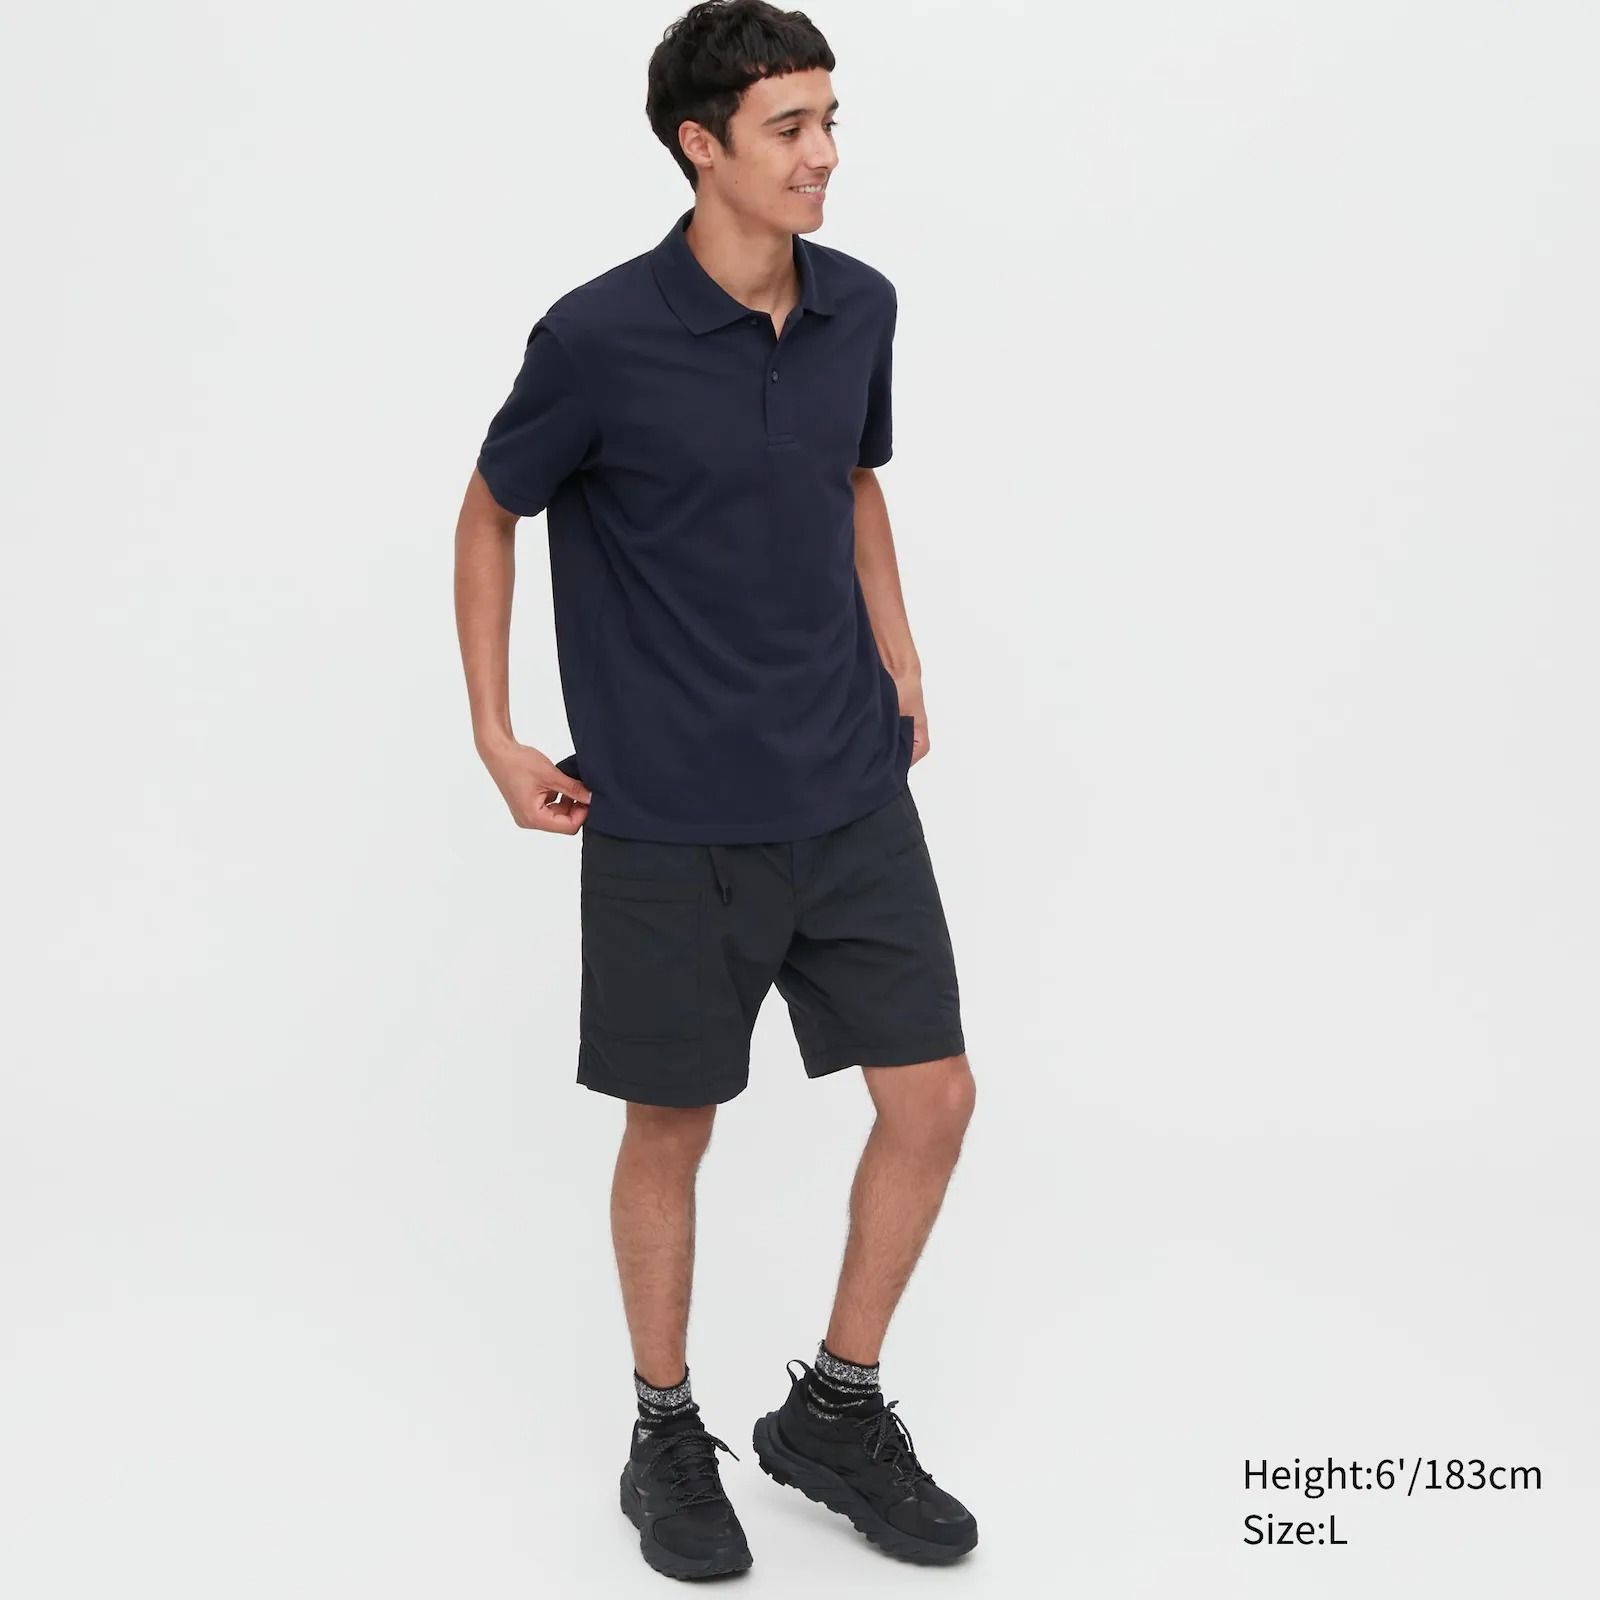  Uniqlo Dry Pique Short Sleeve Polo Shirt - Navy 